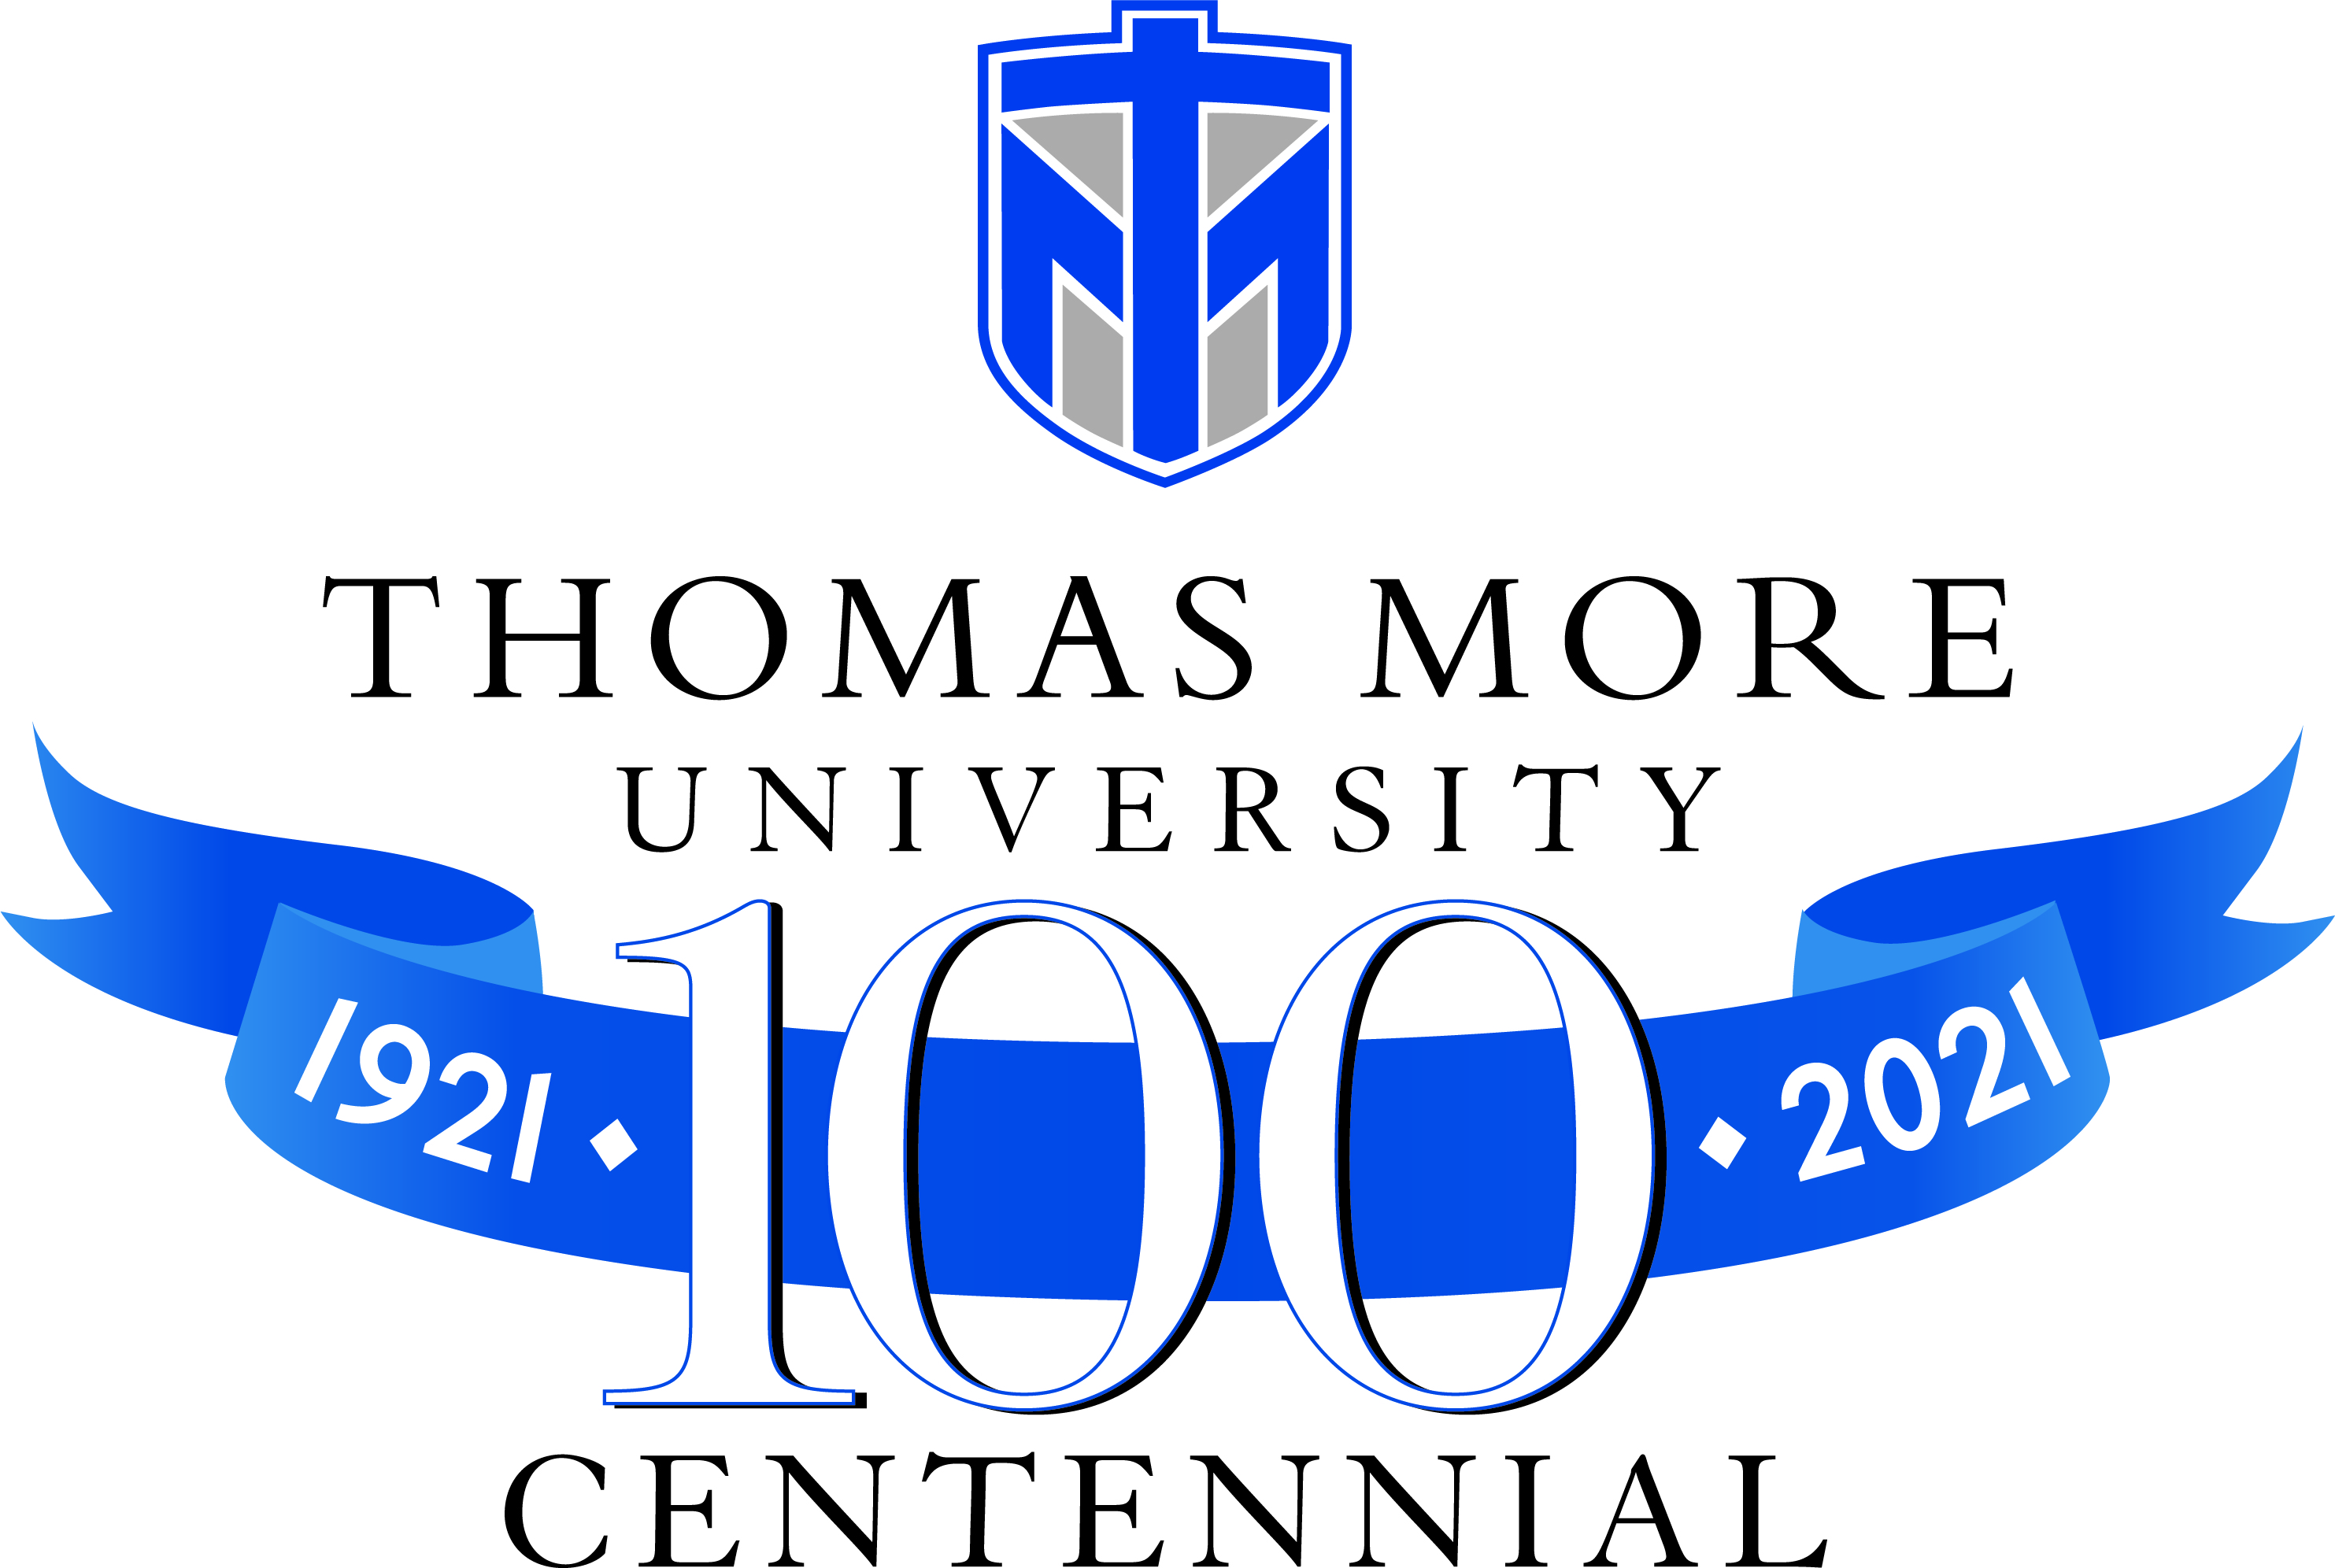 Thomas More University - 100th Centennial Anniversary 1921 - 2021  #ThomasMore
#ThomasMore100
